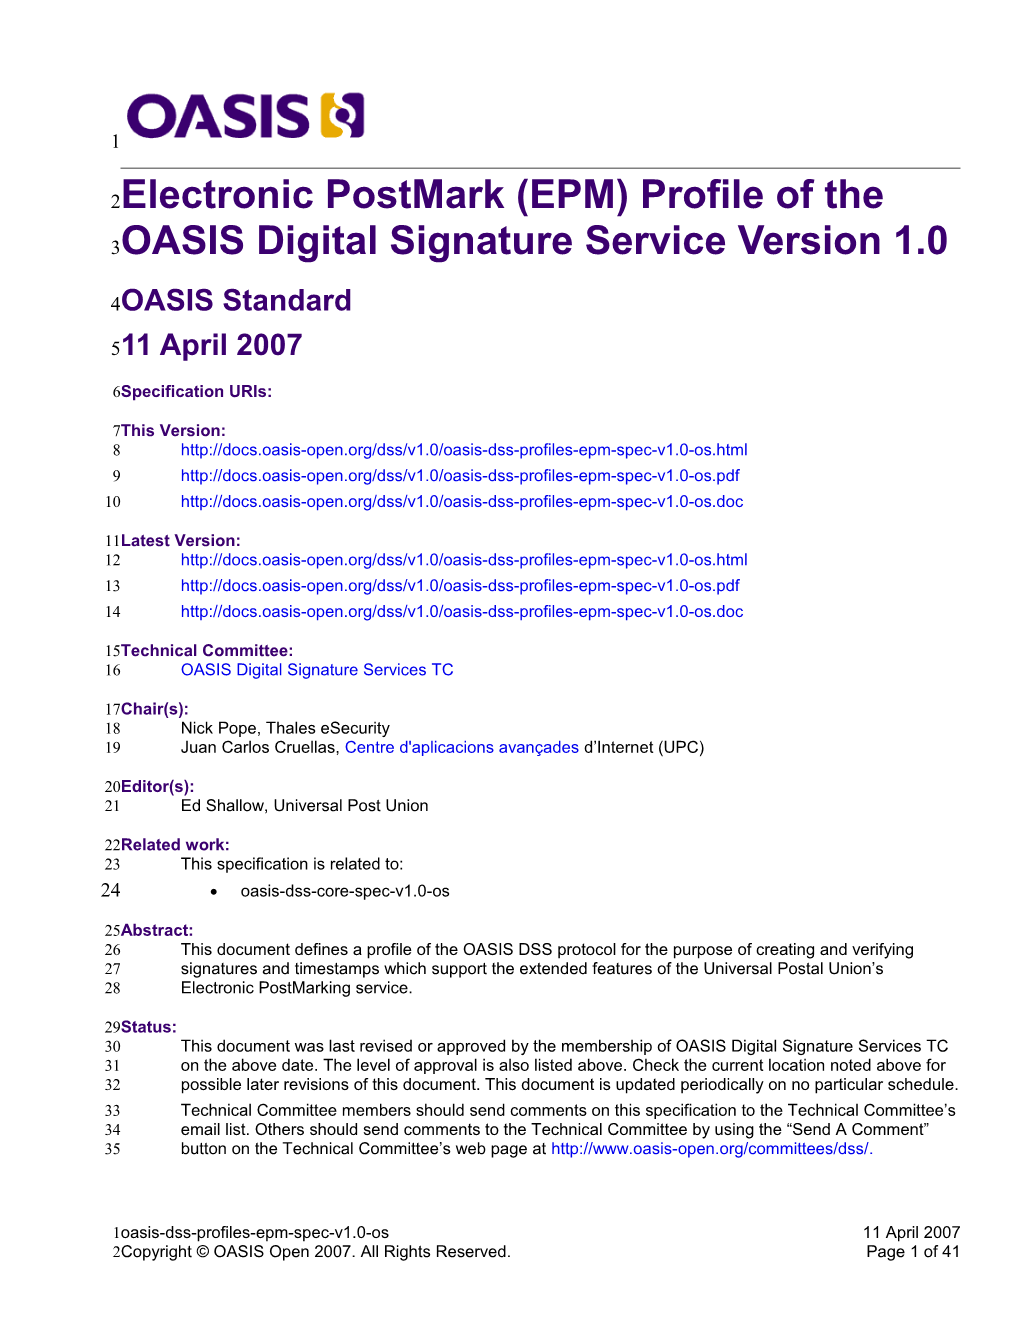 Electronic Postmark (EPM) Profile of the OASIS Digital Signature Service Version 1.0